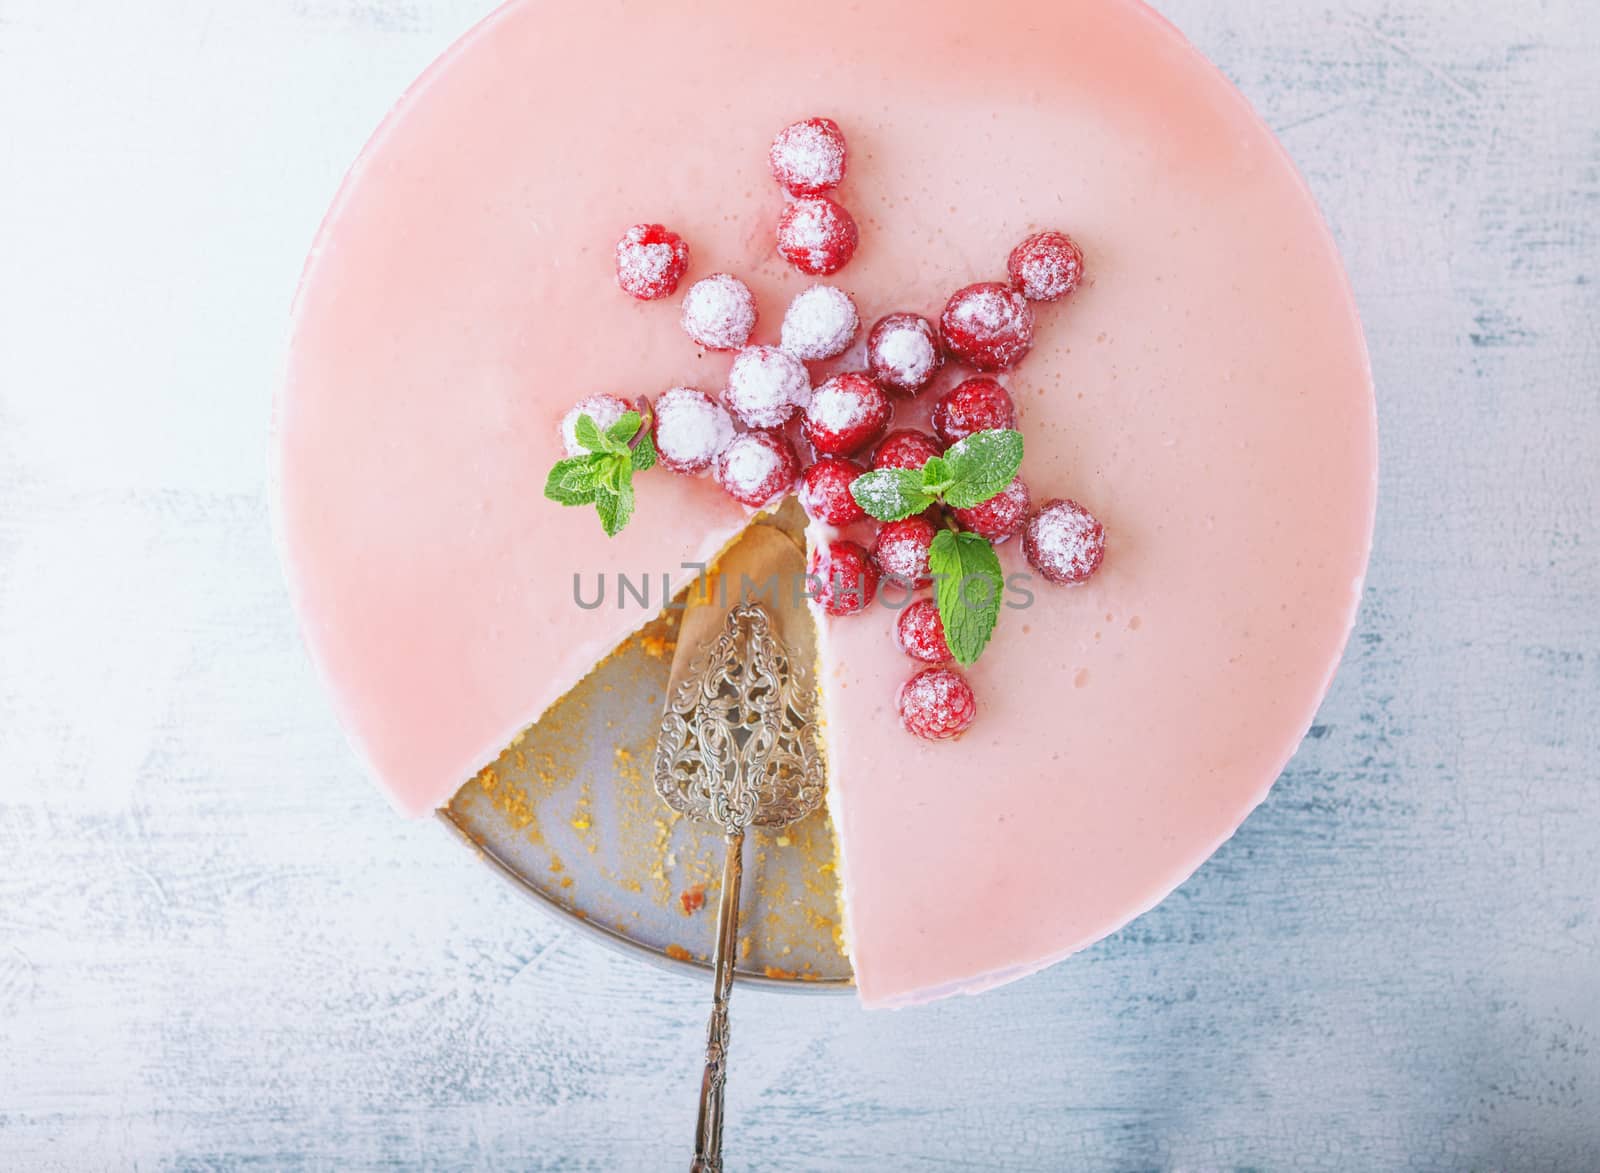 Raspberry yogurt cake decorated with the berries.